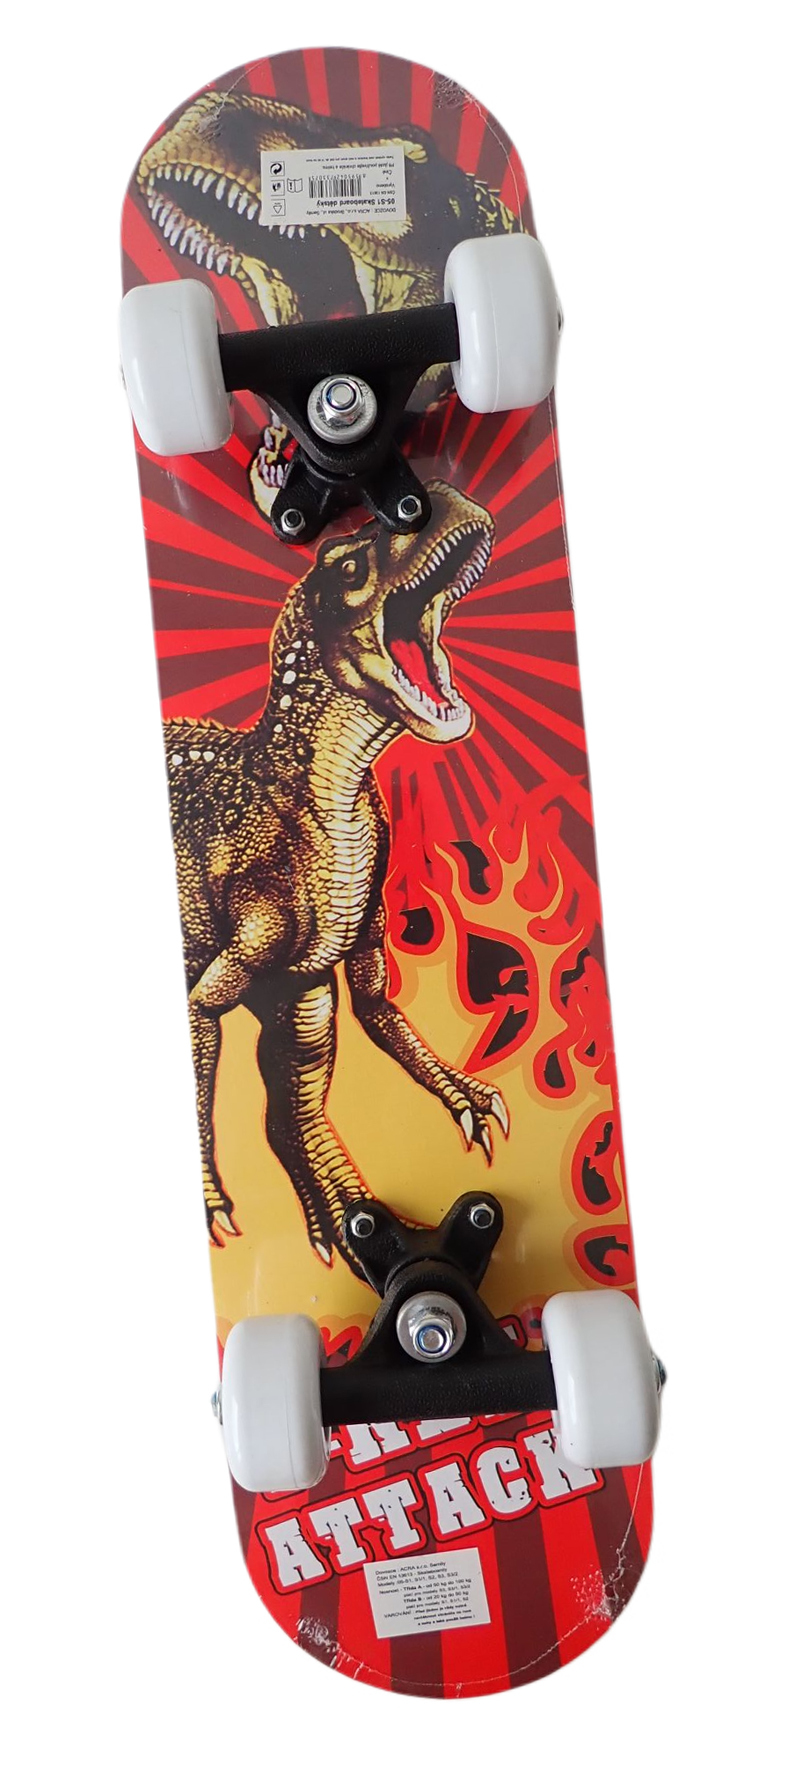 Acra 05-S1 Skate - dětský skateboard dinosaur